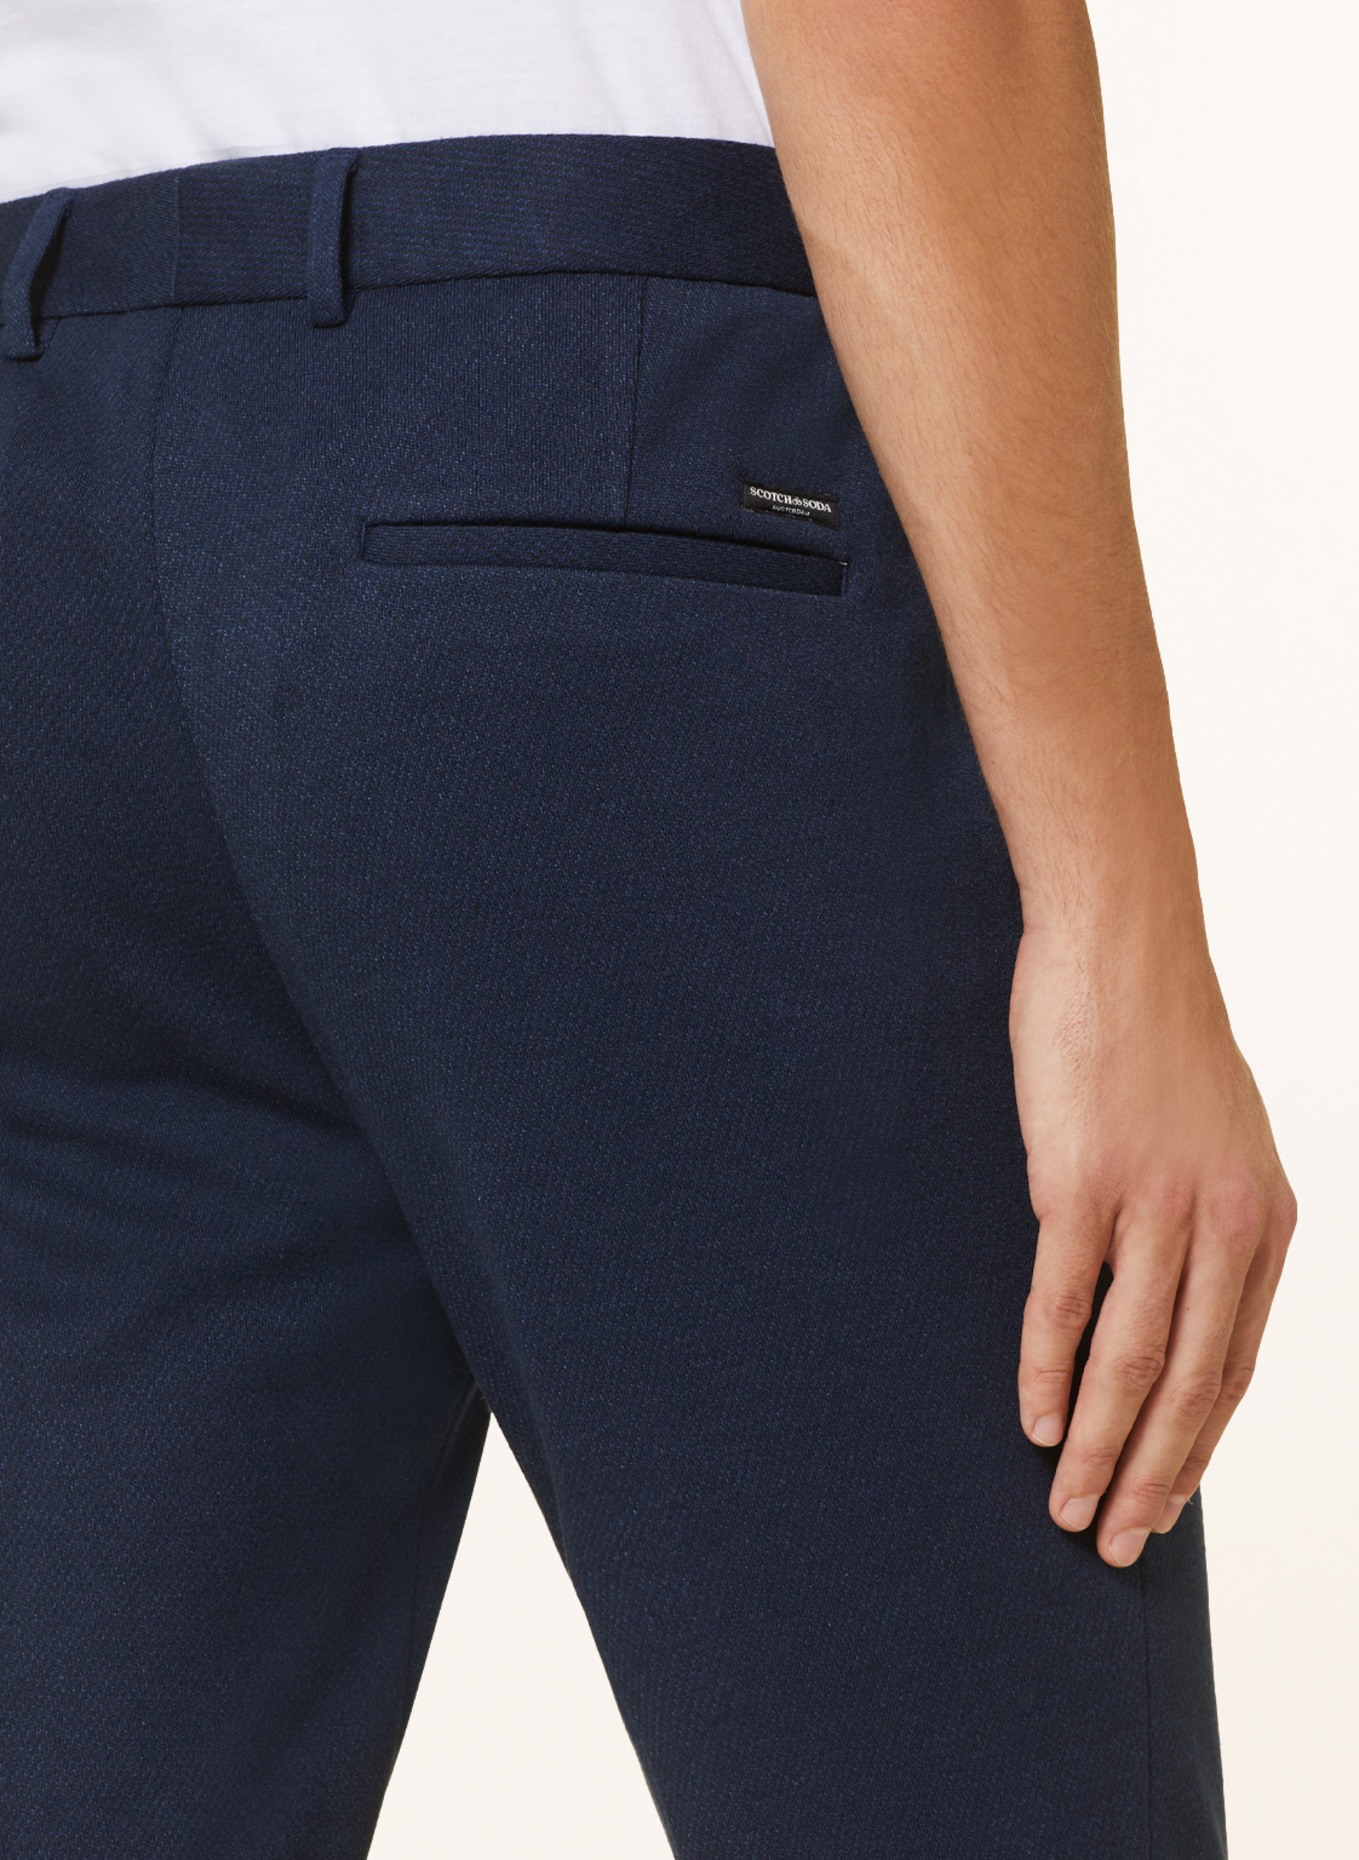 Golf Pants Men's Summer Ice Silk High Elastic Ultra-thin Casual Trousers  Quick-drying Running Golf Wear Sweatpants - AliExpress